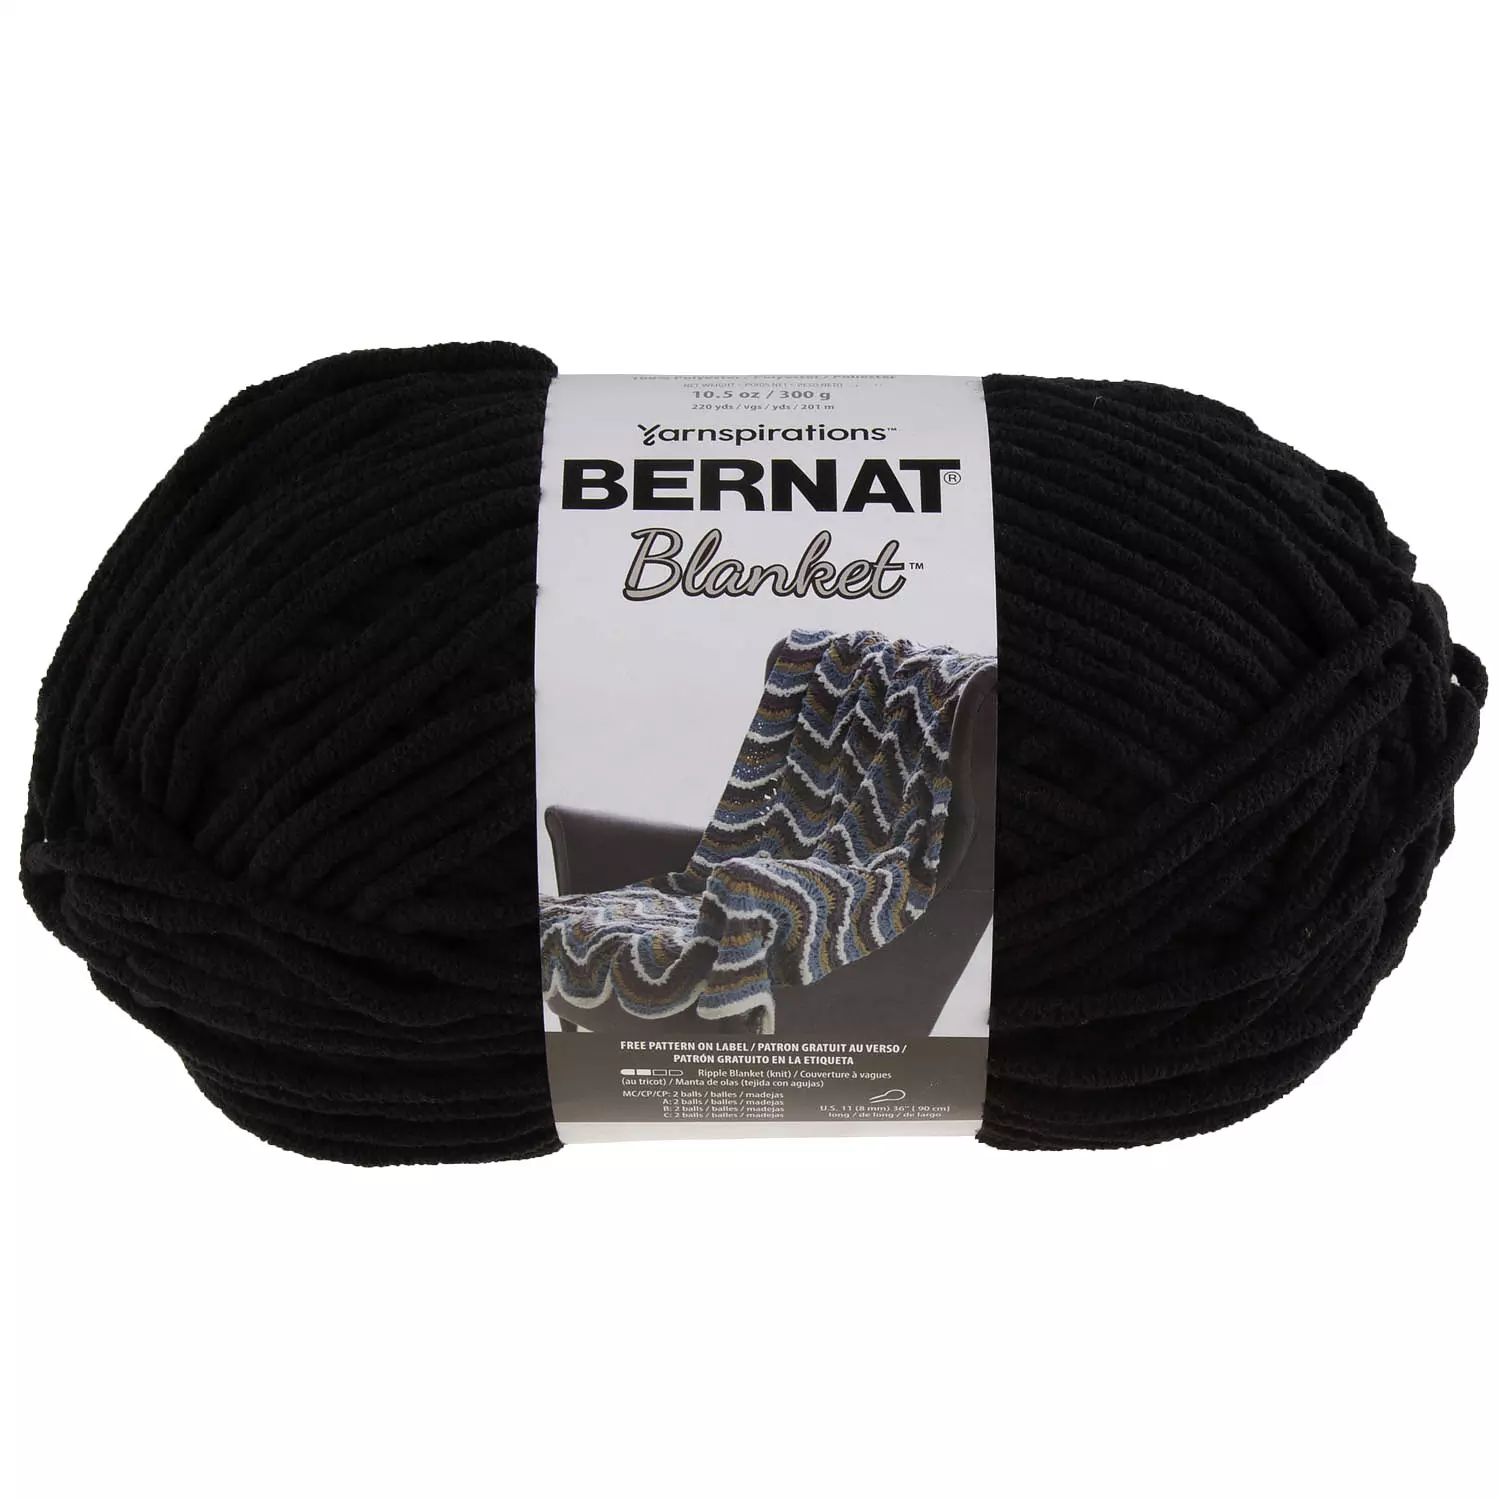 Bernat Blanket - Yarn, coal